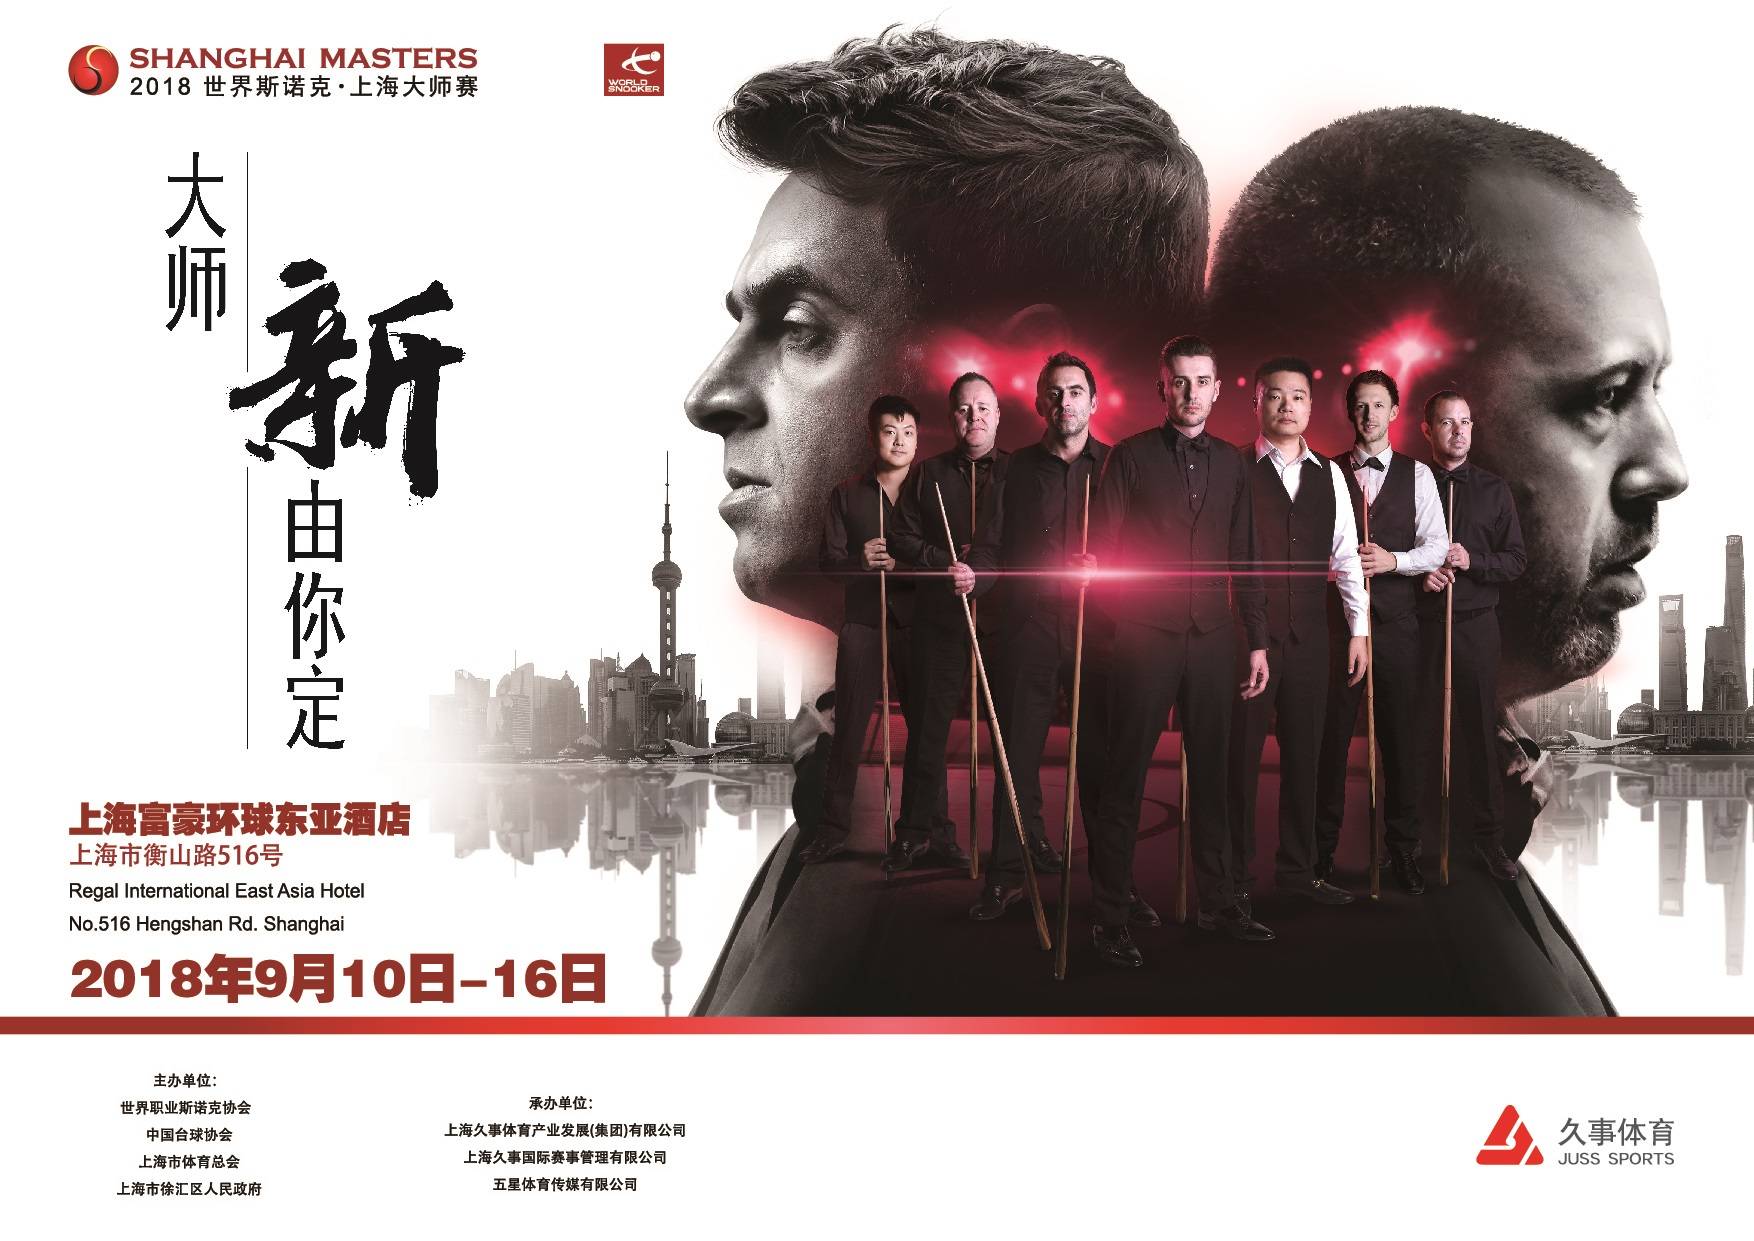 Snooker Shanghai Masters 2021